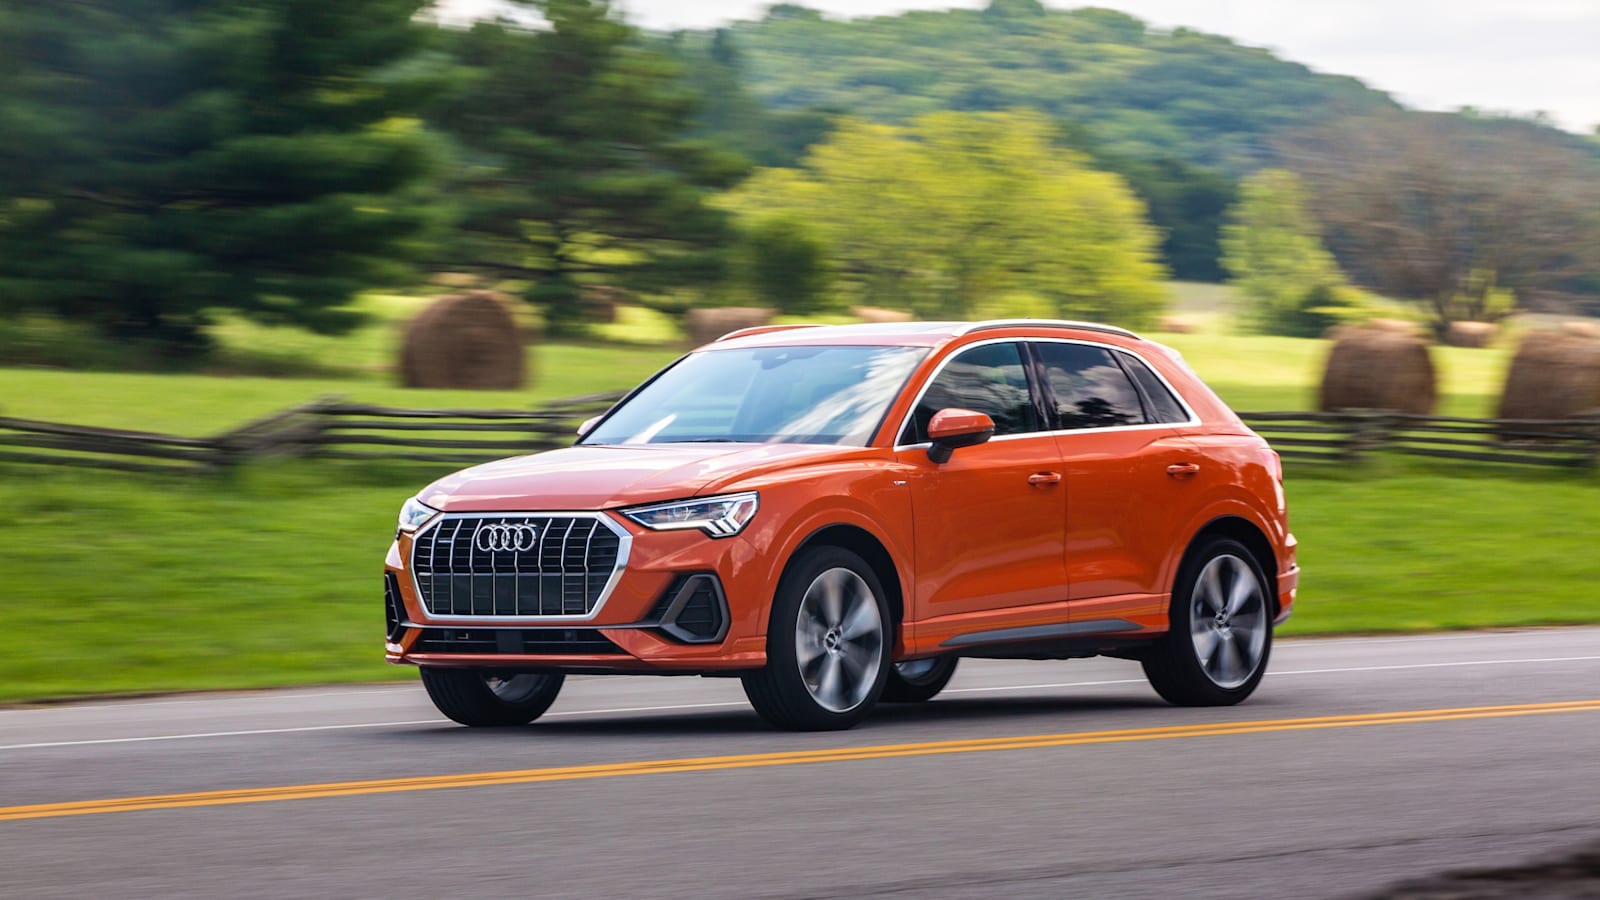 2022 Audi Q3 Review | What's new, price, fuel economy - Autoblog